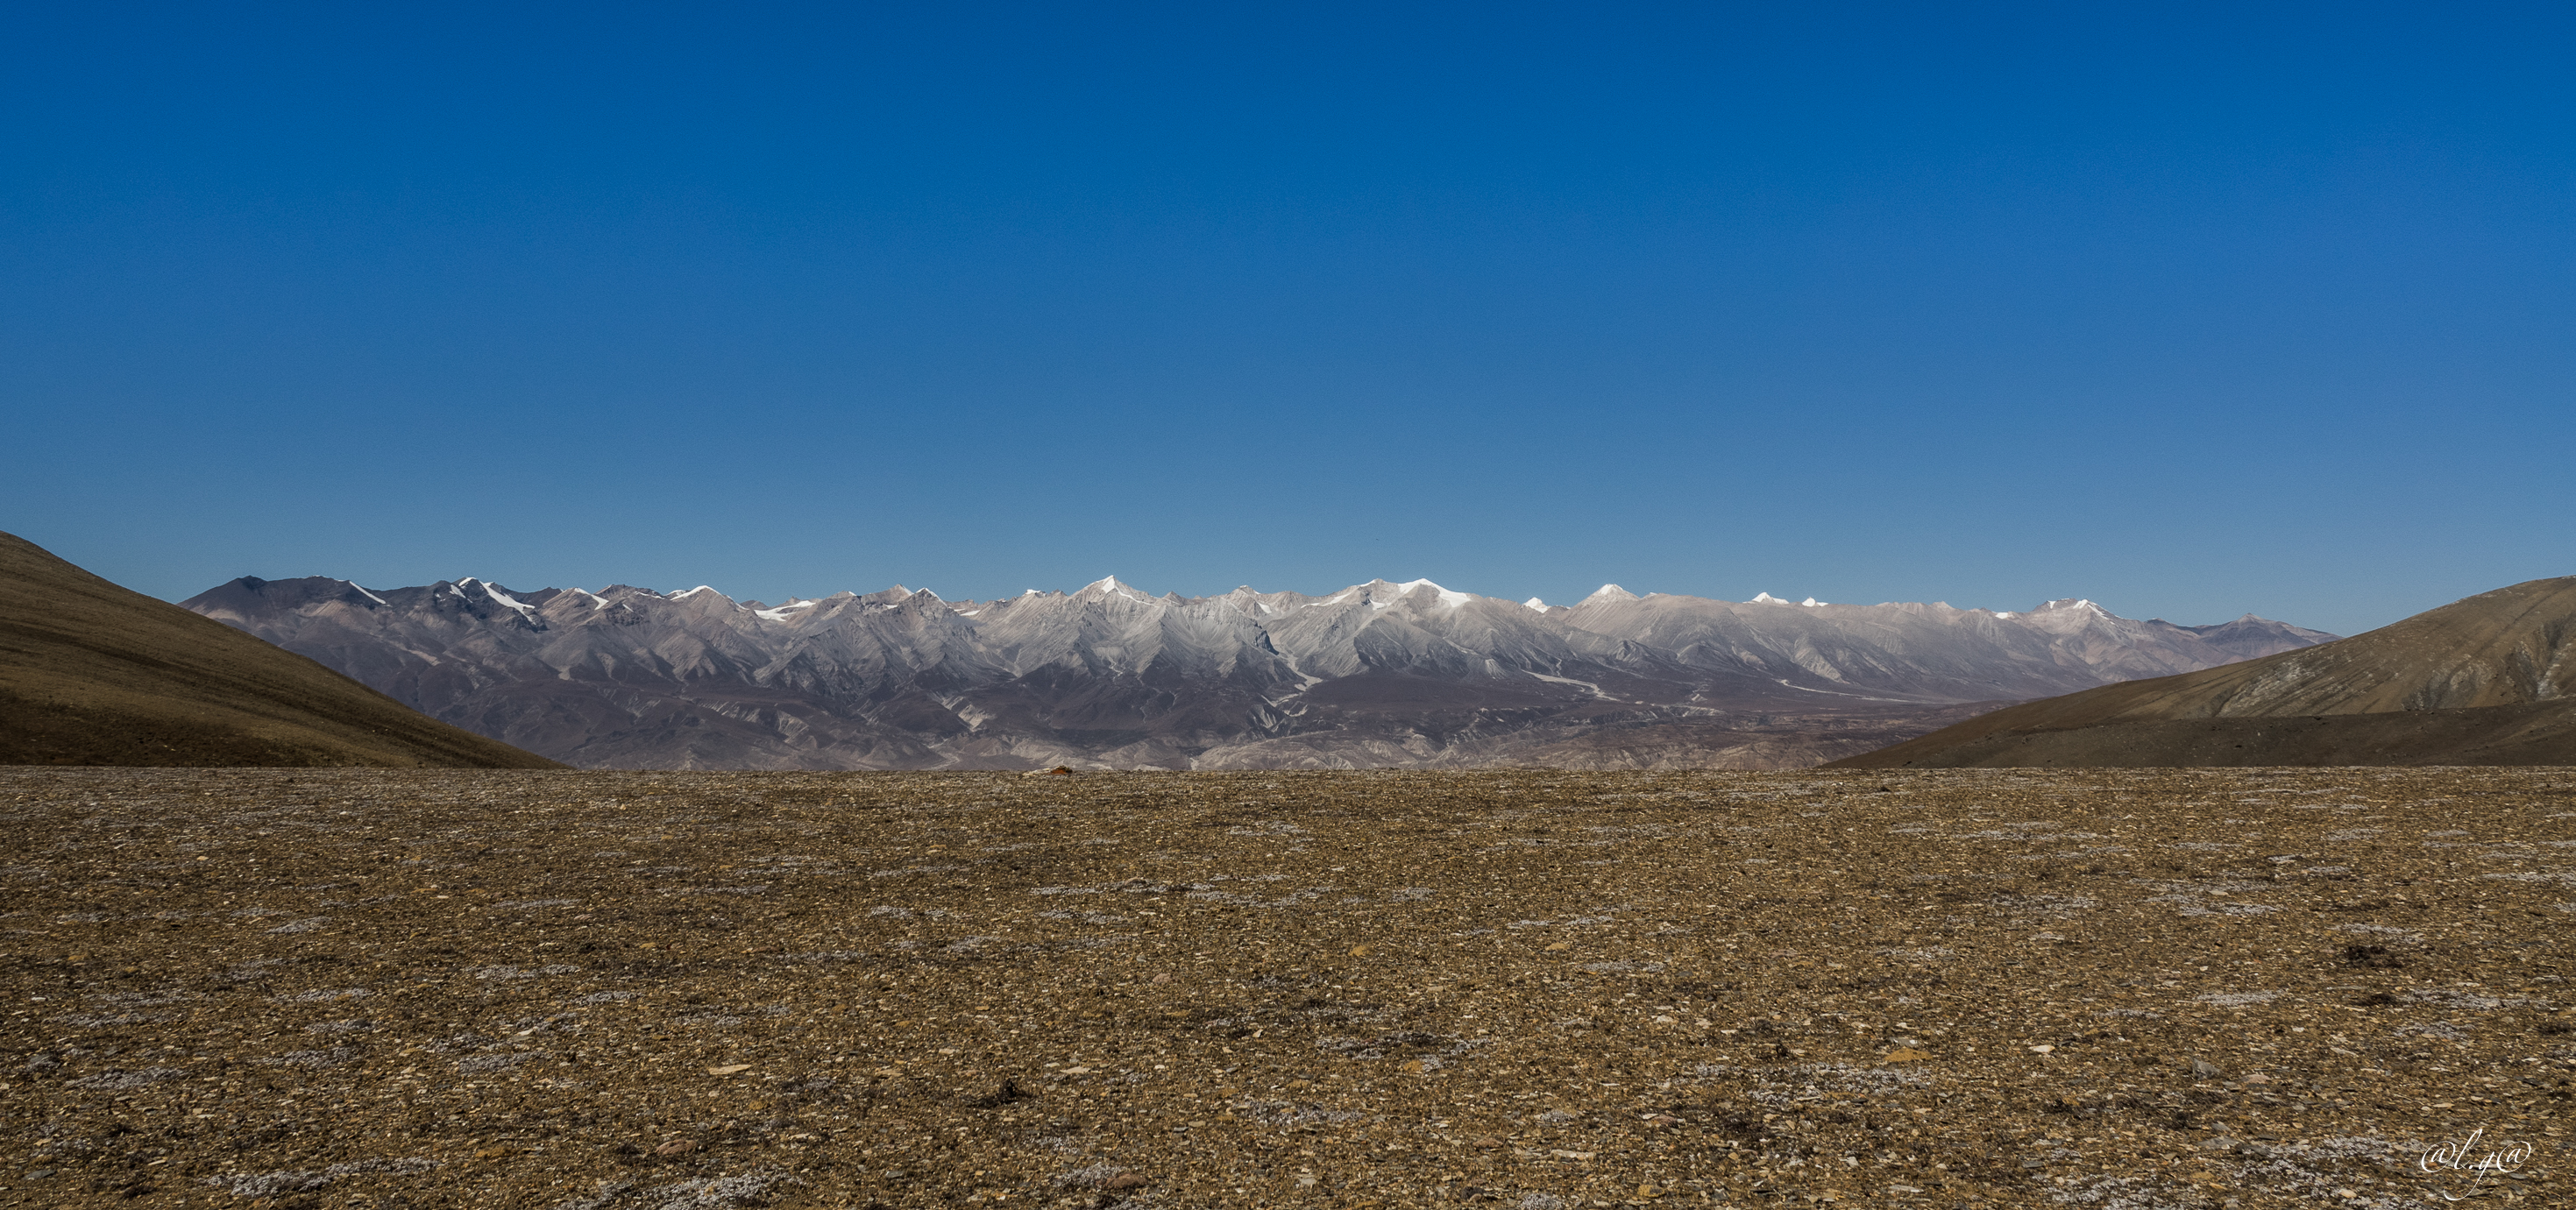 Chinese Pass (5130m) Le plateau tibétain